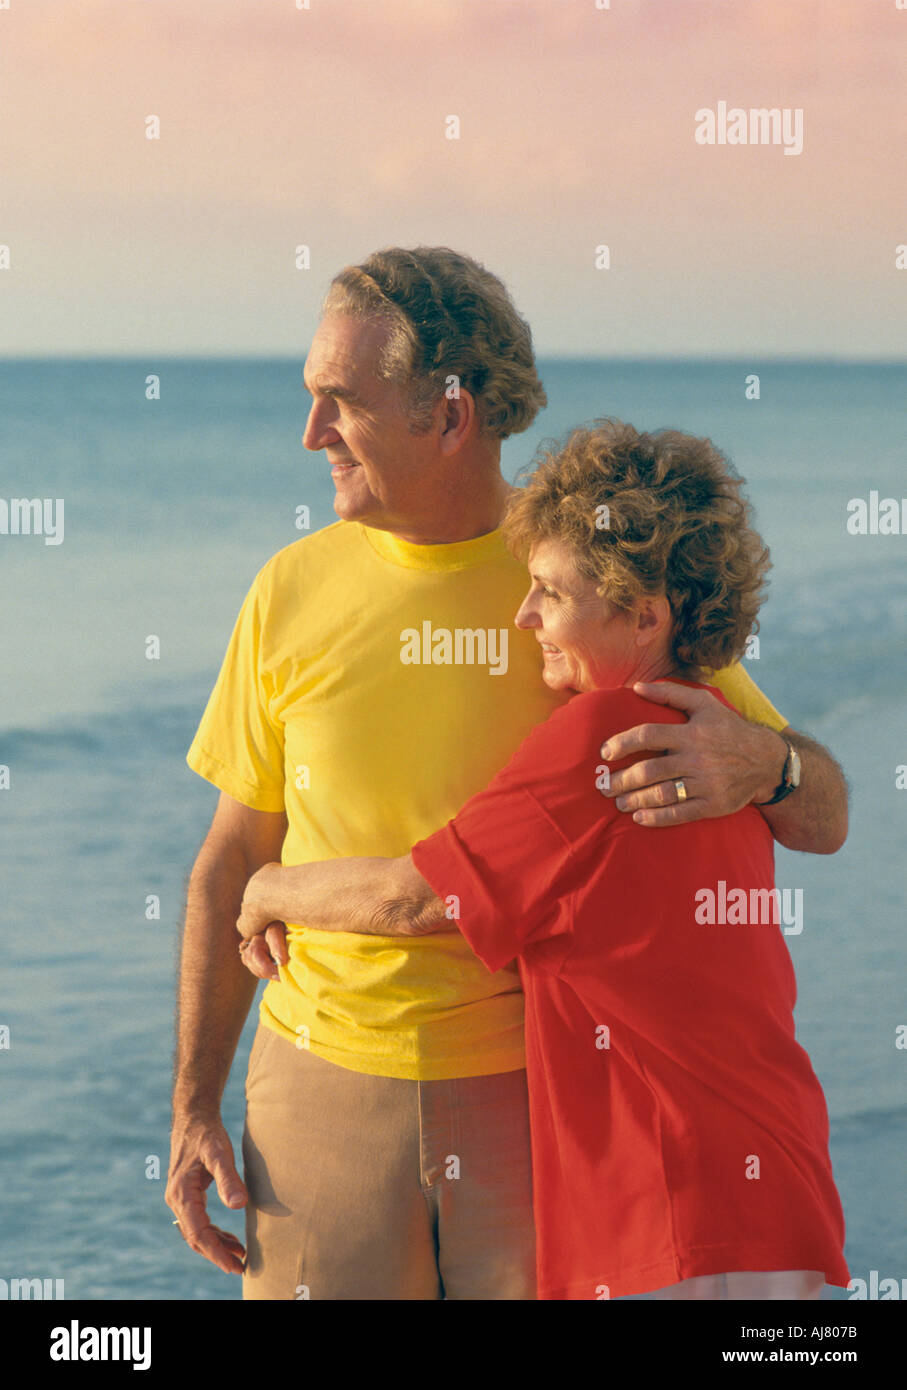 Mature couple embracing on beach Stock Photo